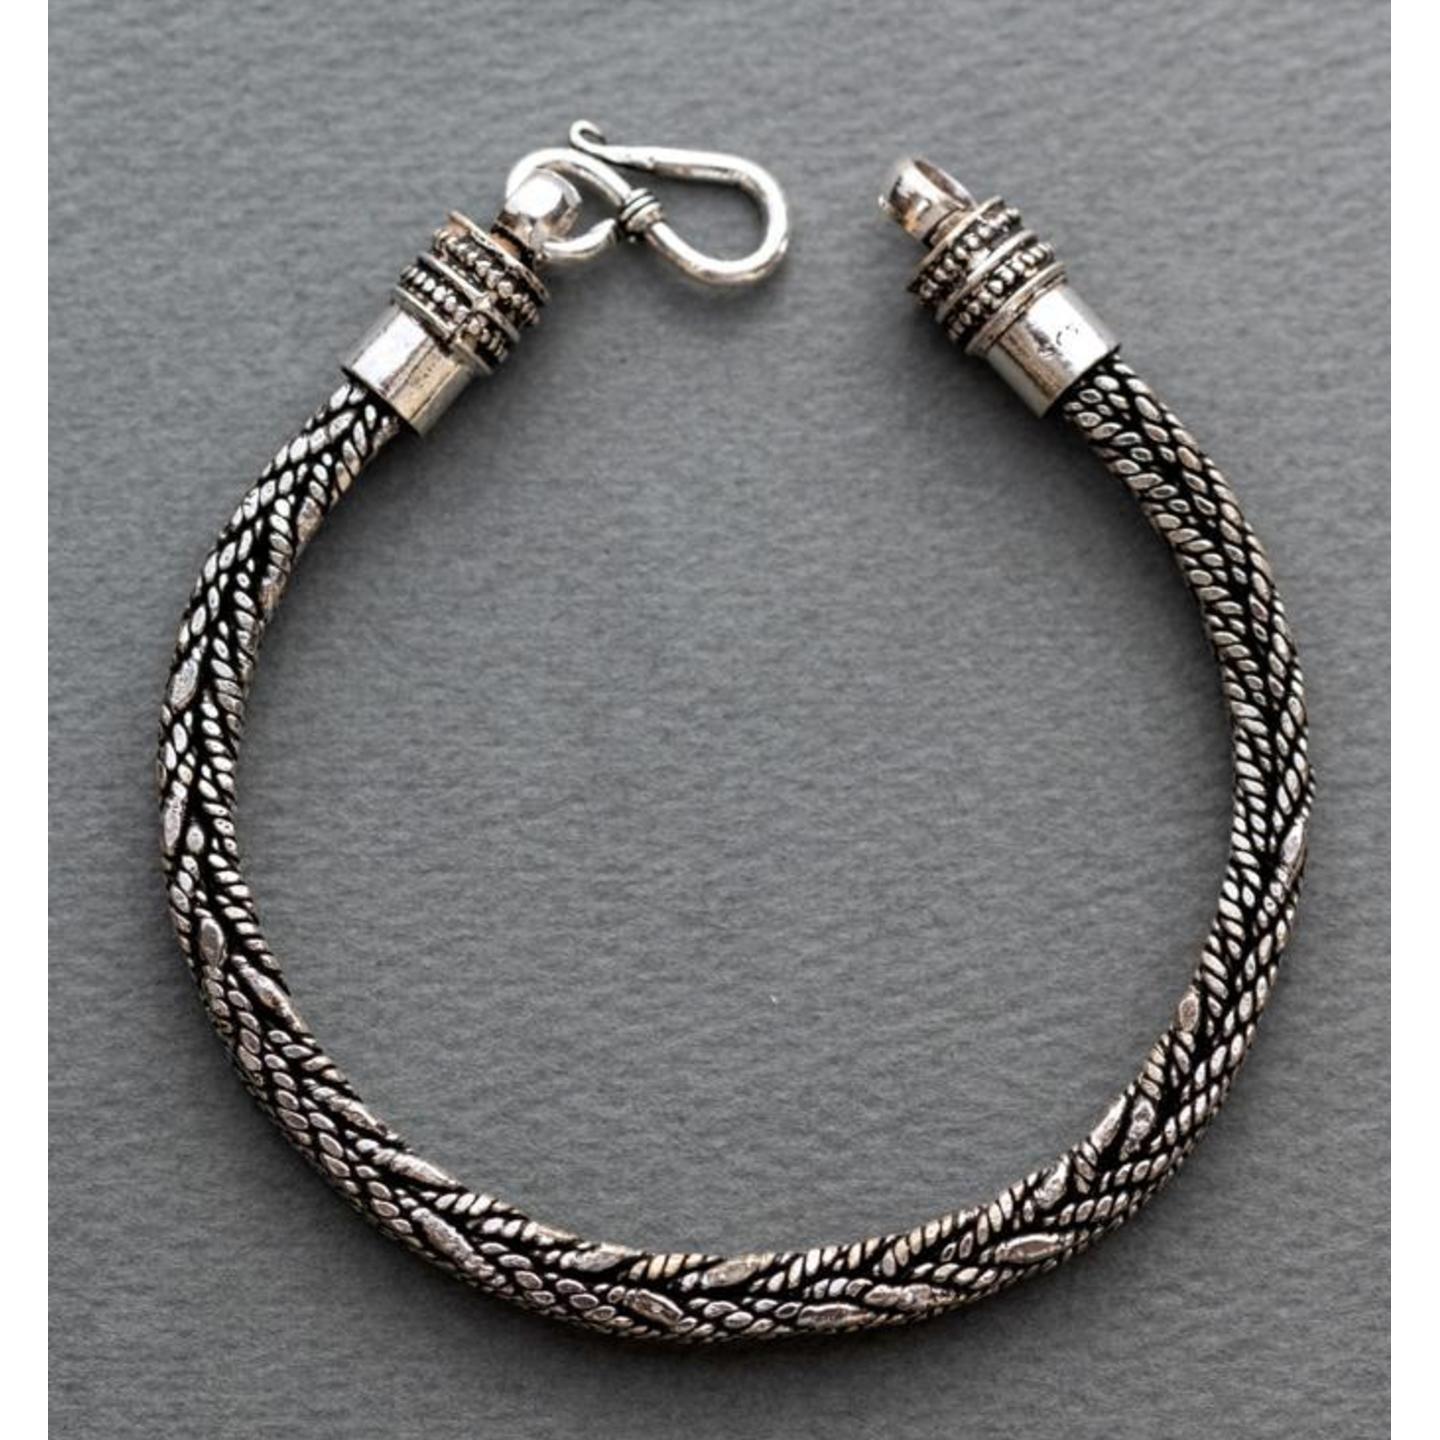 925 Solid Sterling Silver Handmade Bracelet - Length 8.25 Inches - Designer Mens Silver Bracelet - Oxidized Jewelry  38gm